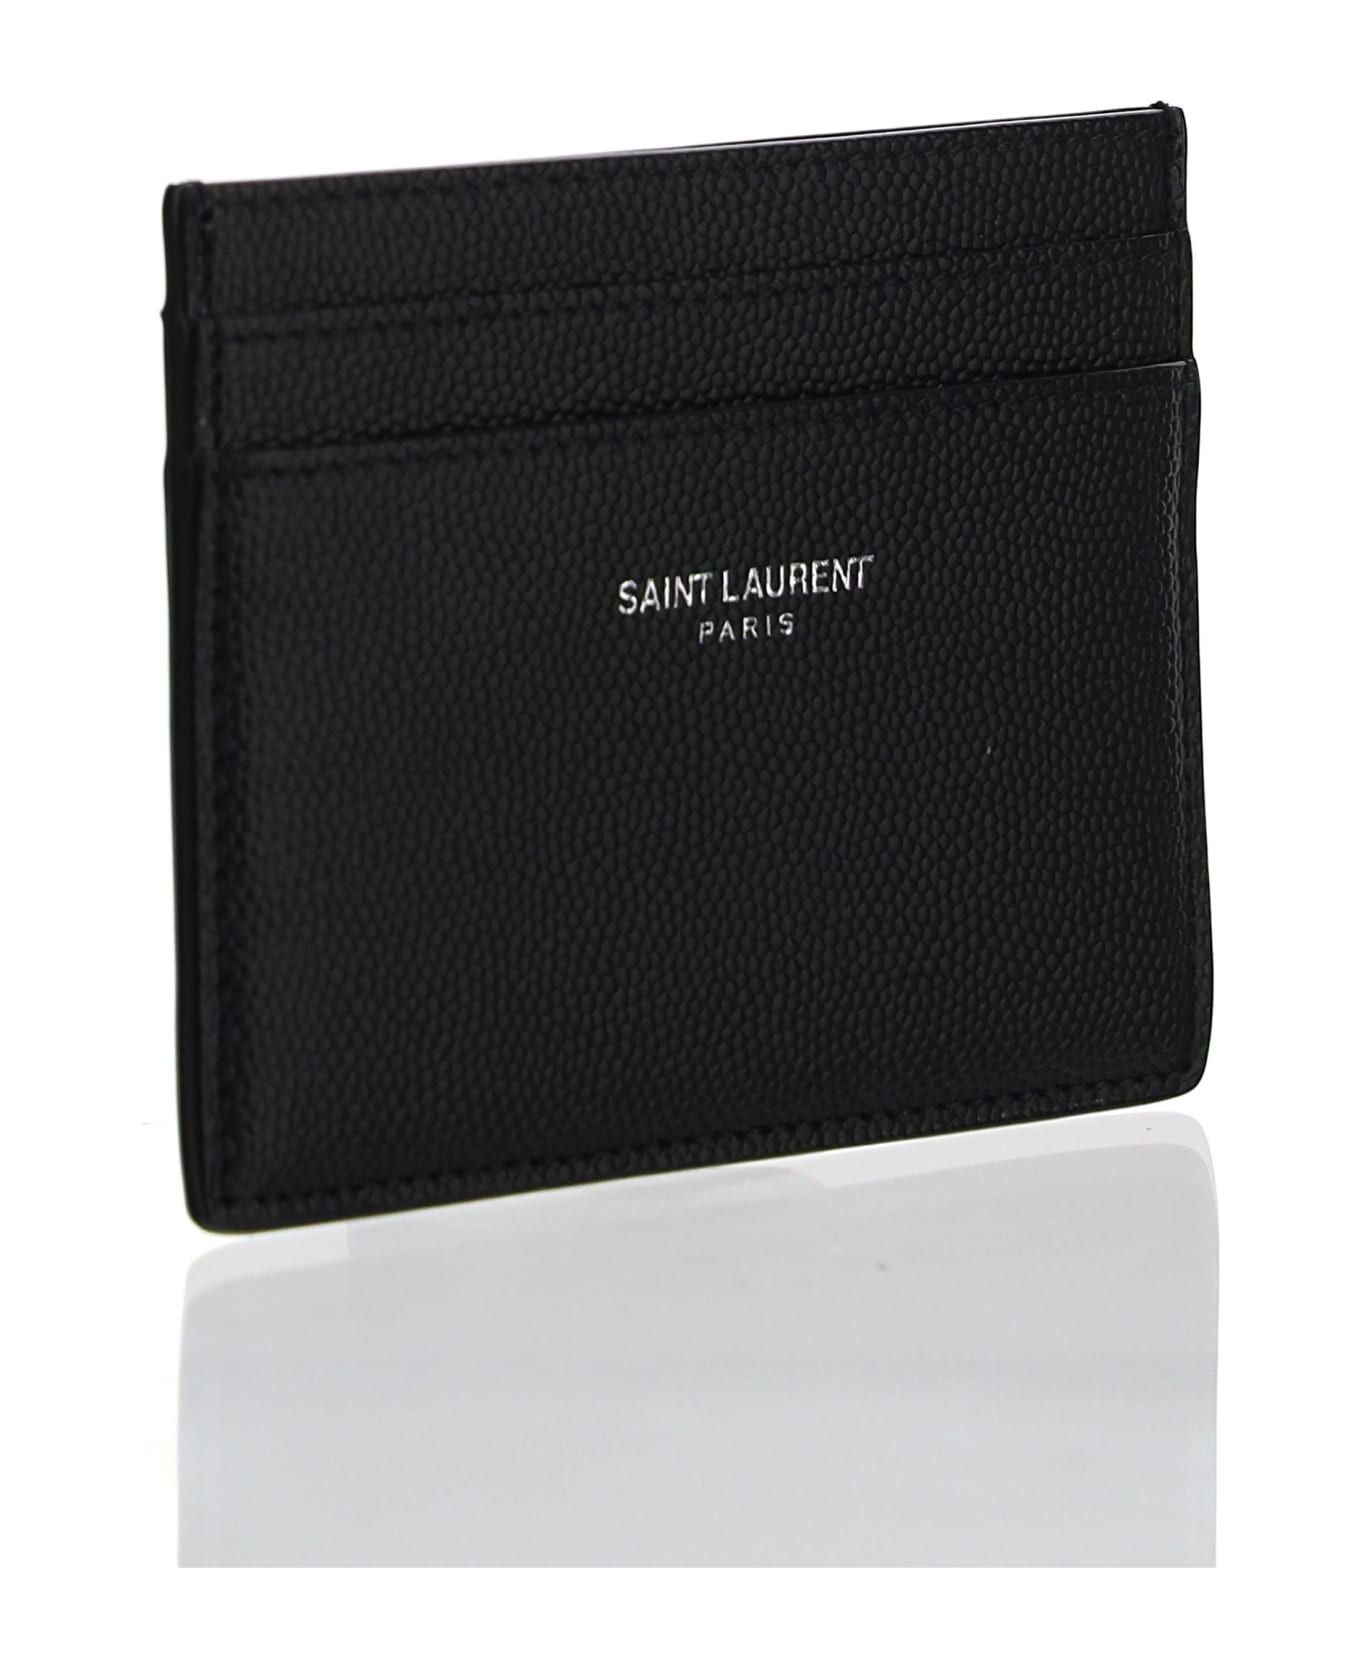 Saint Laurent Credit Card Holder - Nero